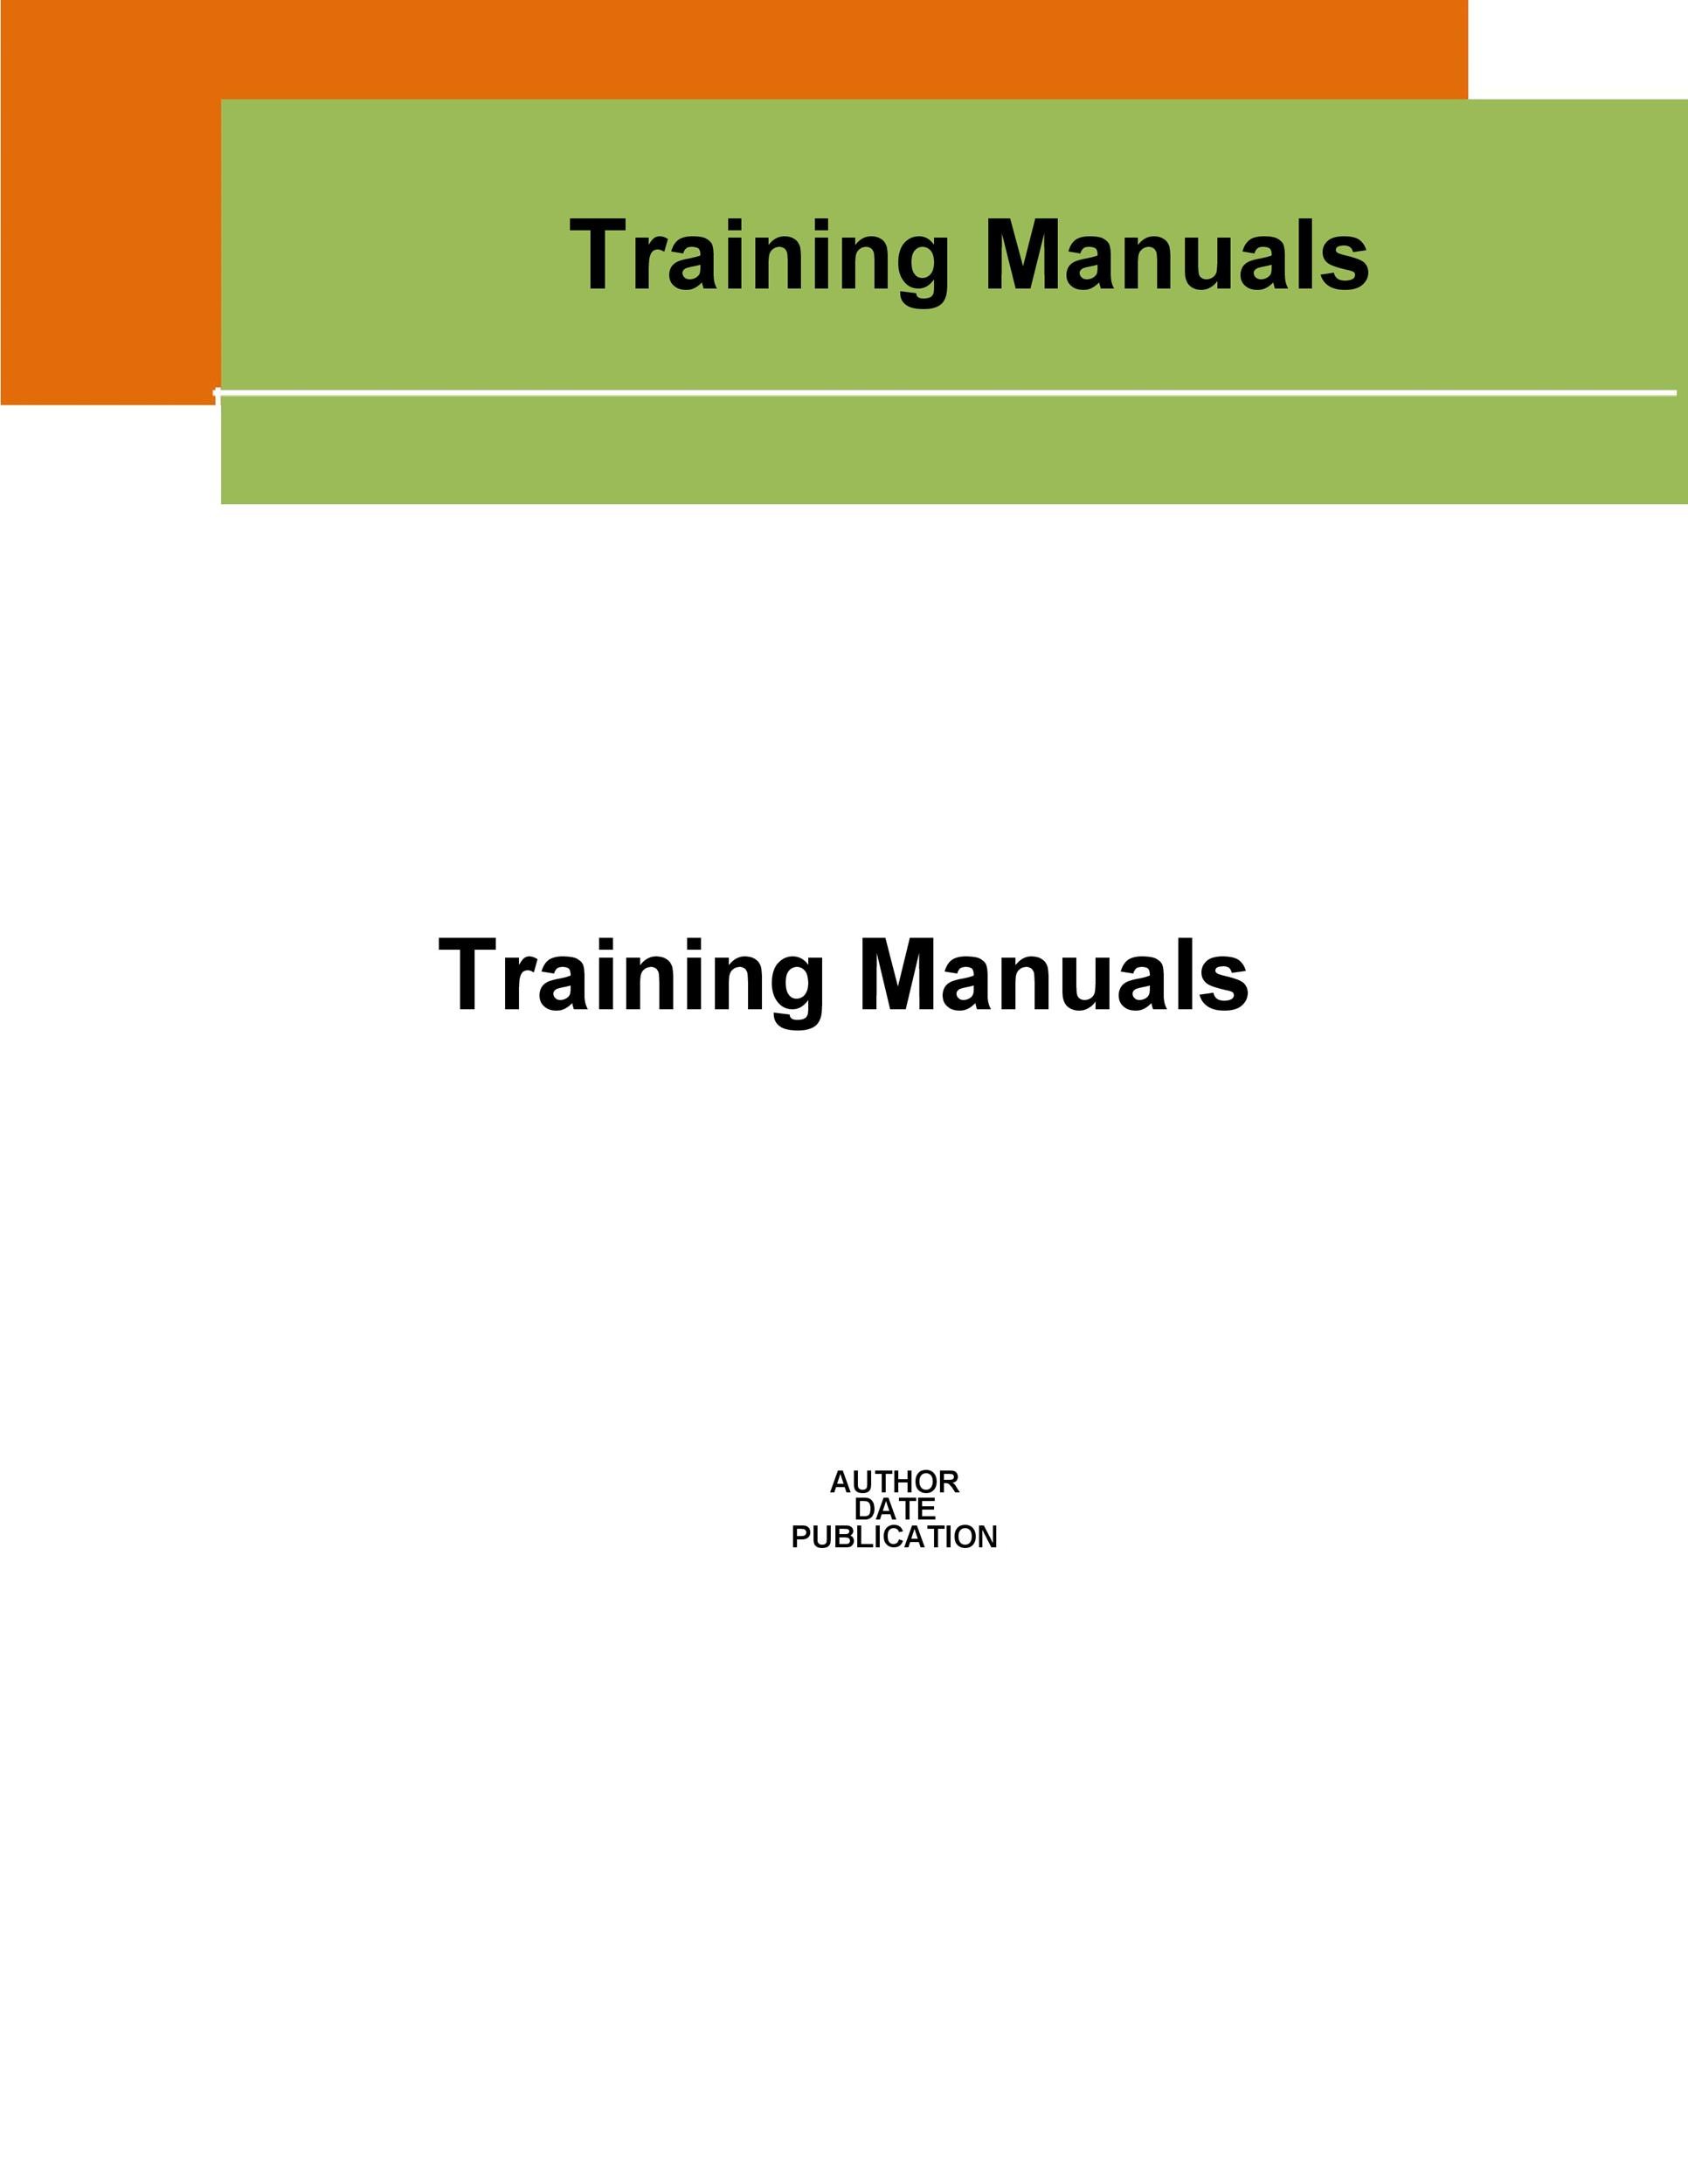 Free training manual template 16